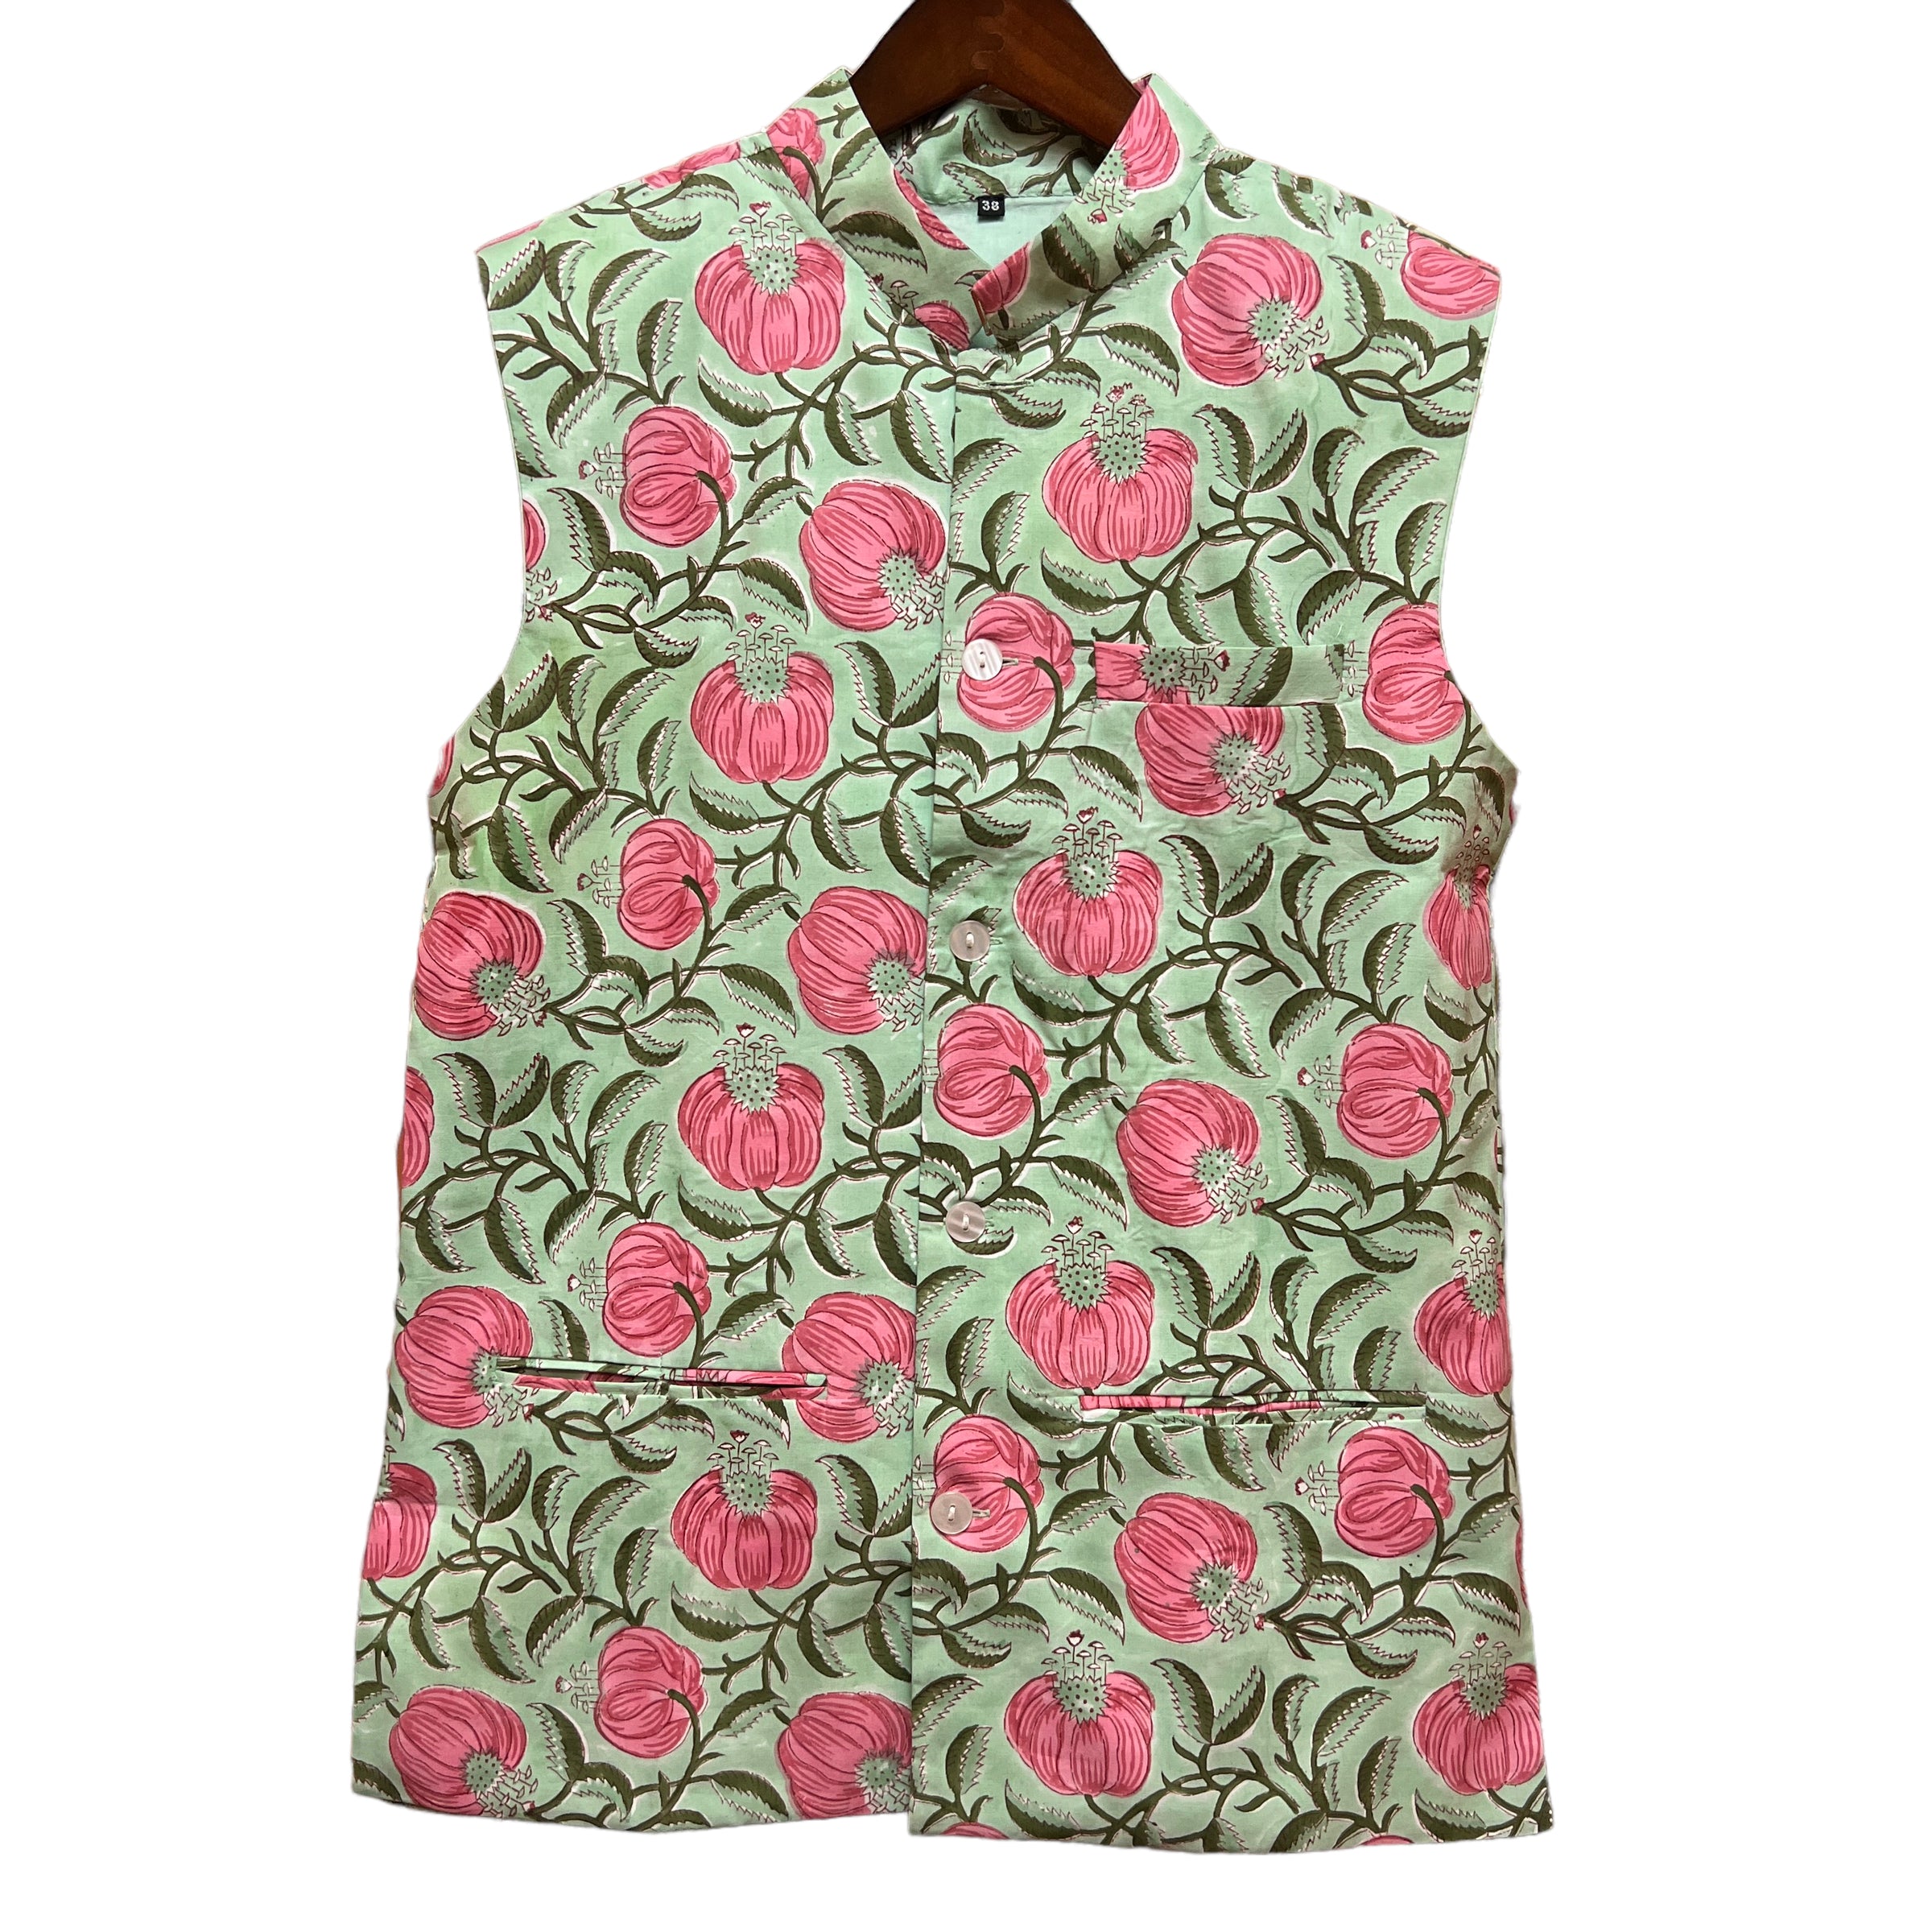 Cotton Block Print Vests-4 Styles - Vintage India NYC